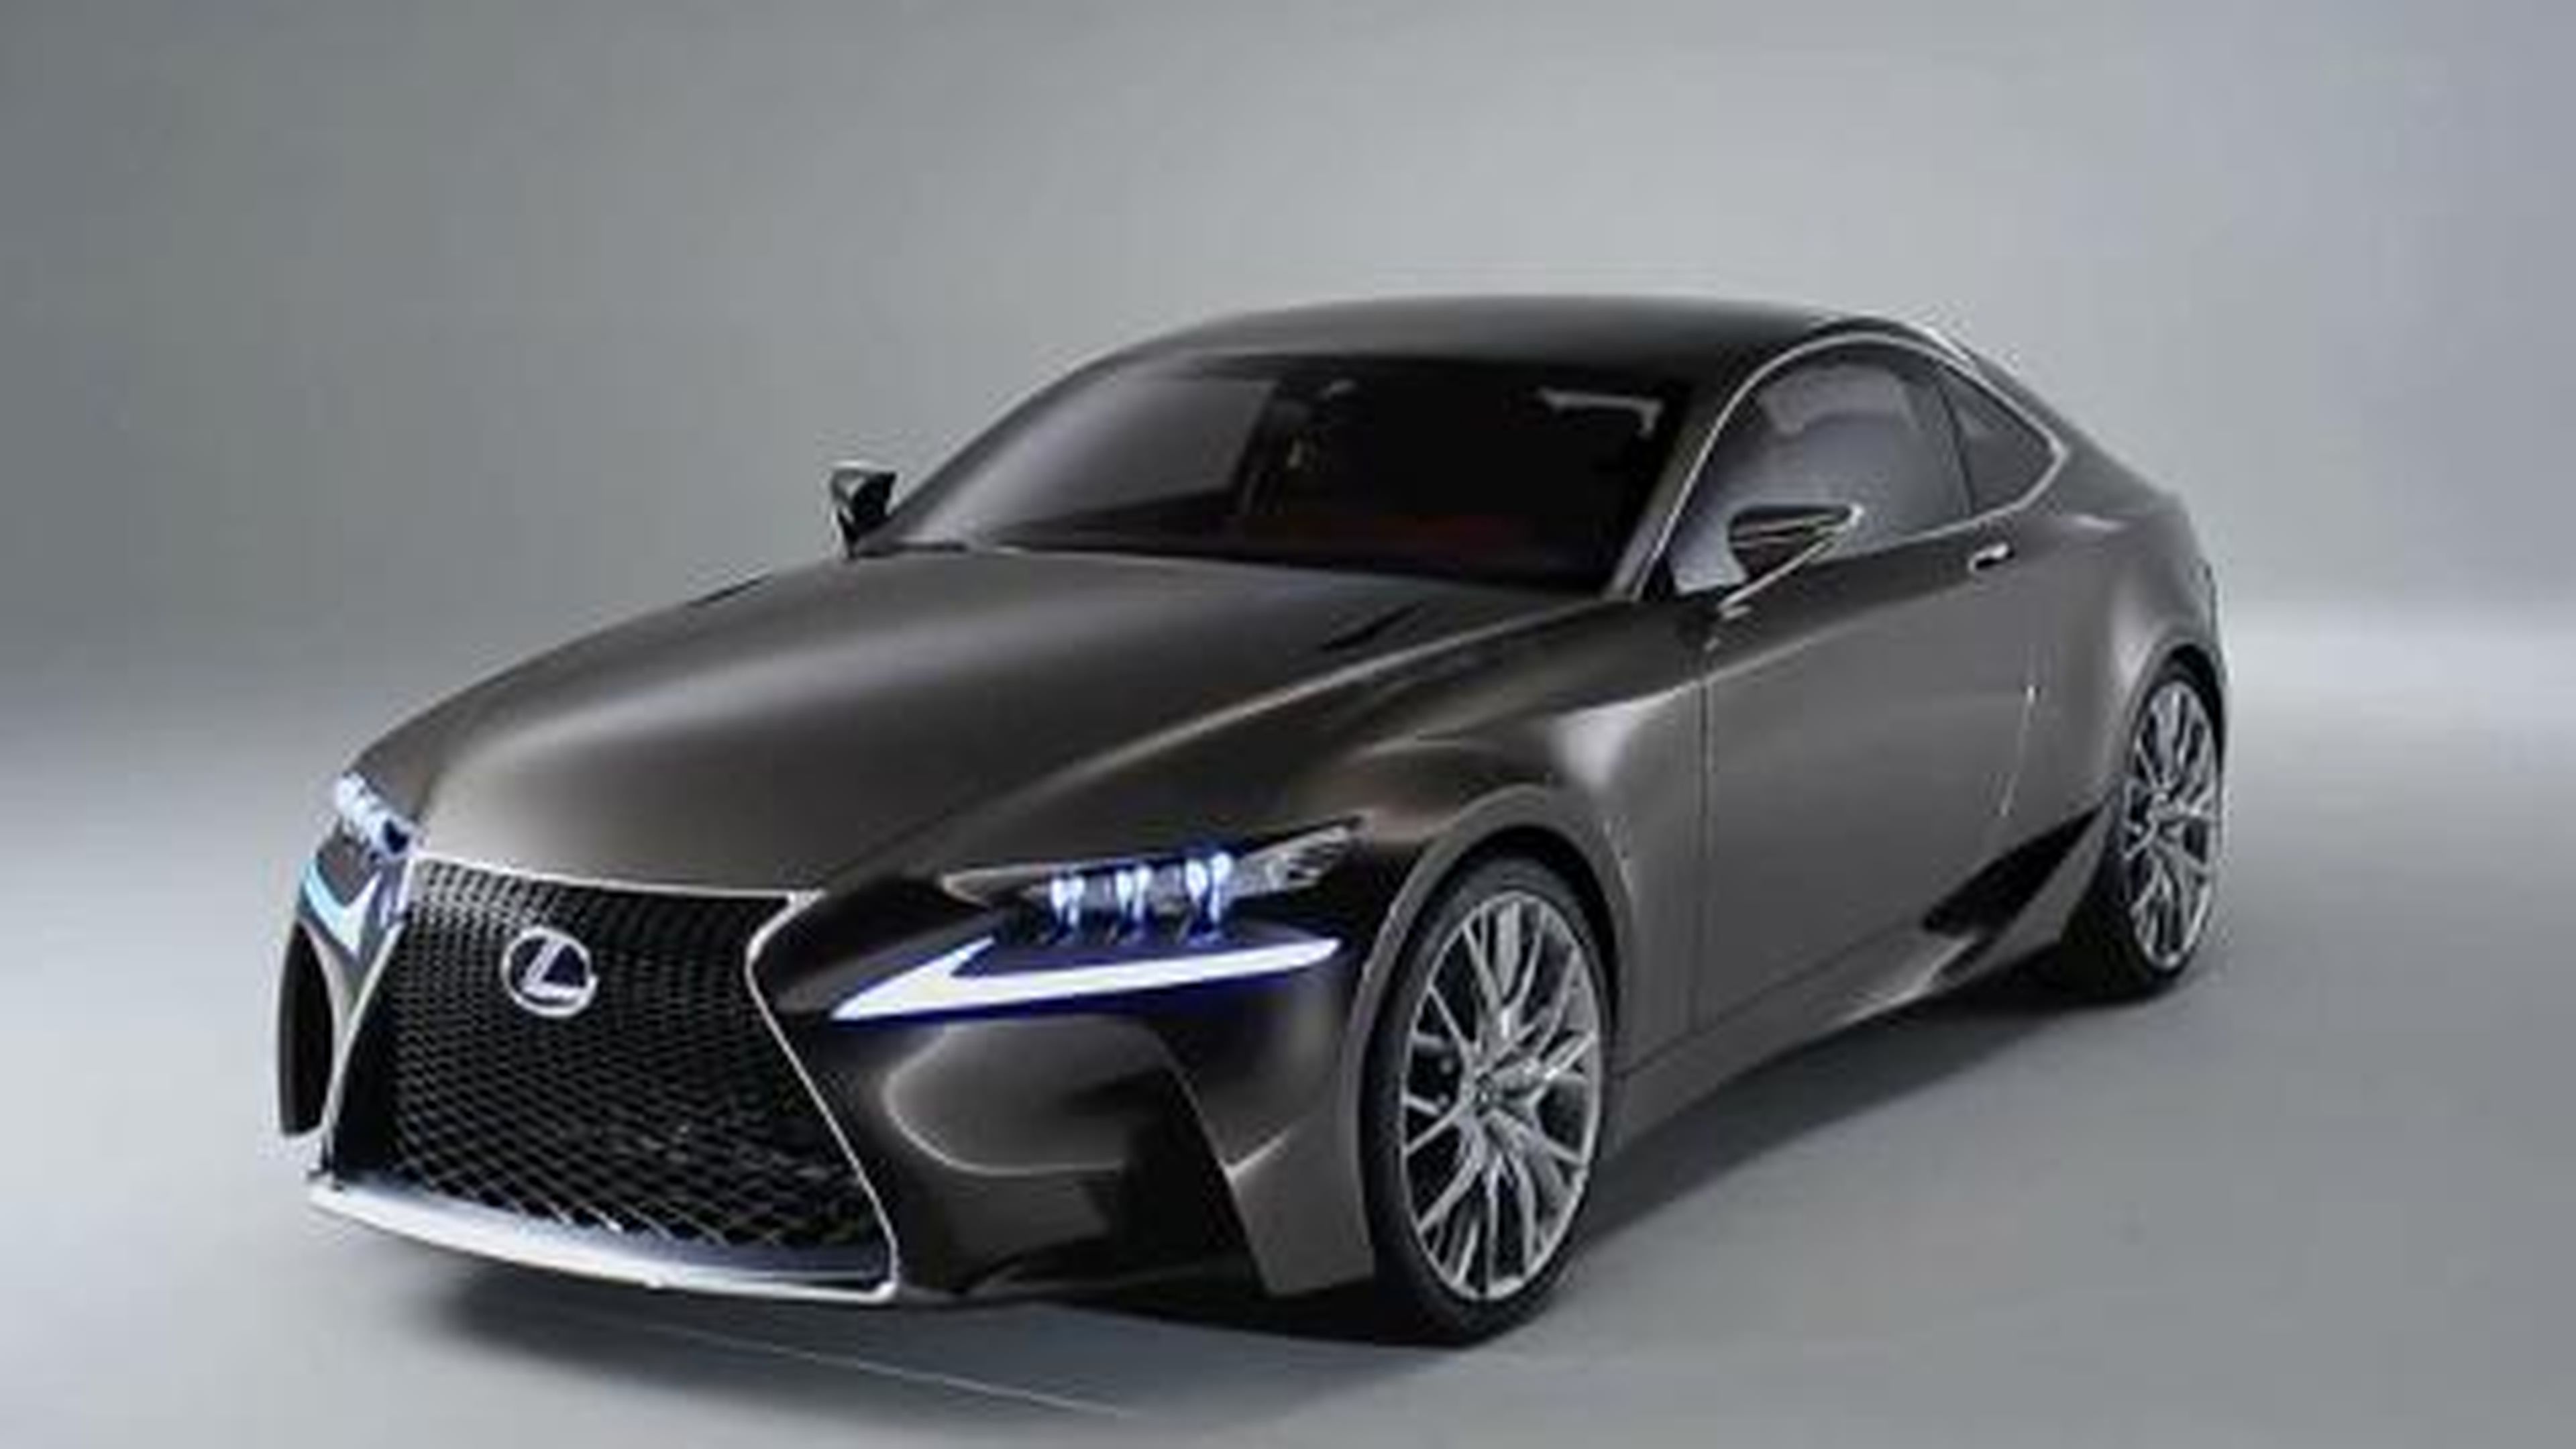 Vídeo: Lexus LF-CC concept car